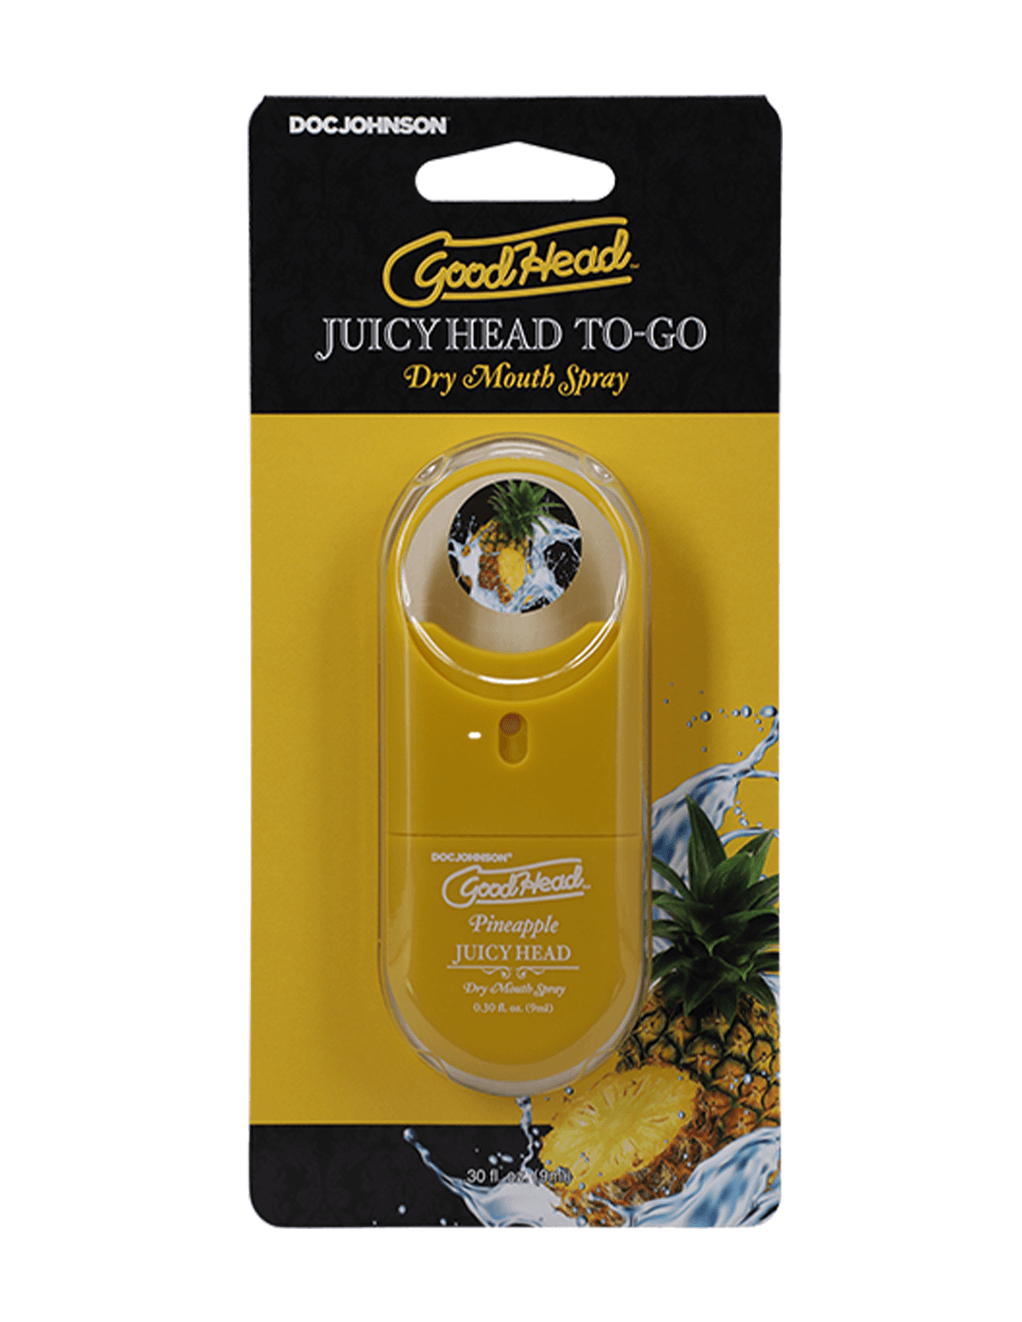 GoodHead Juicy Head To Go - Pineapple Package 